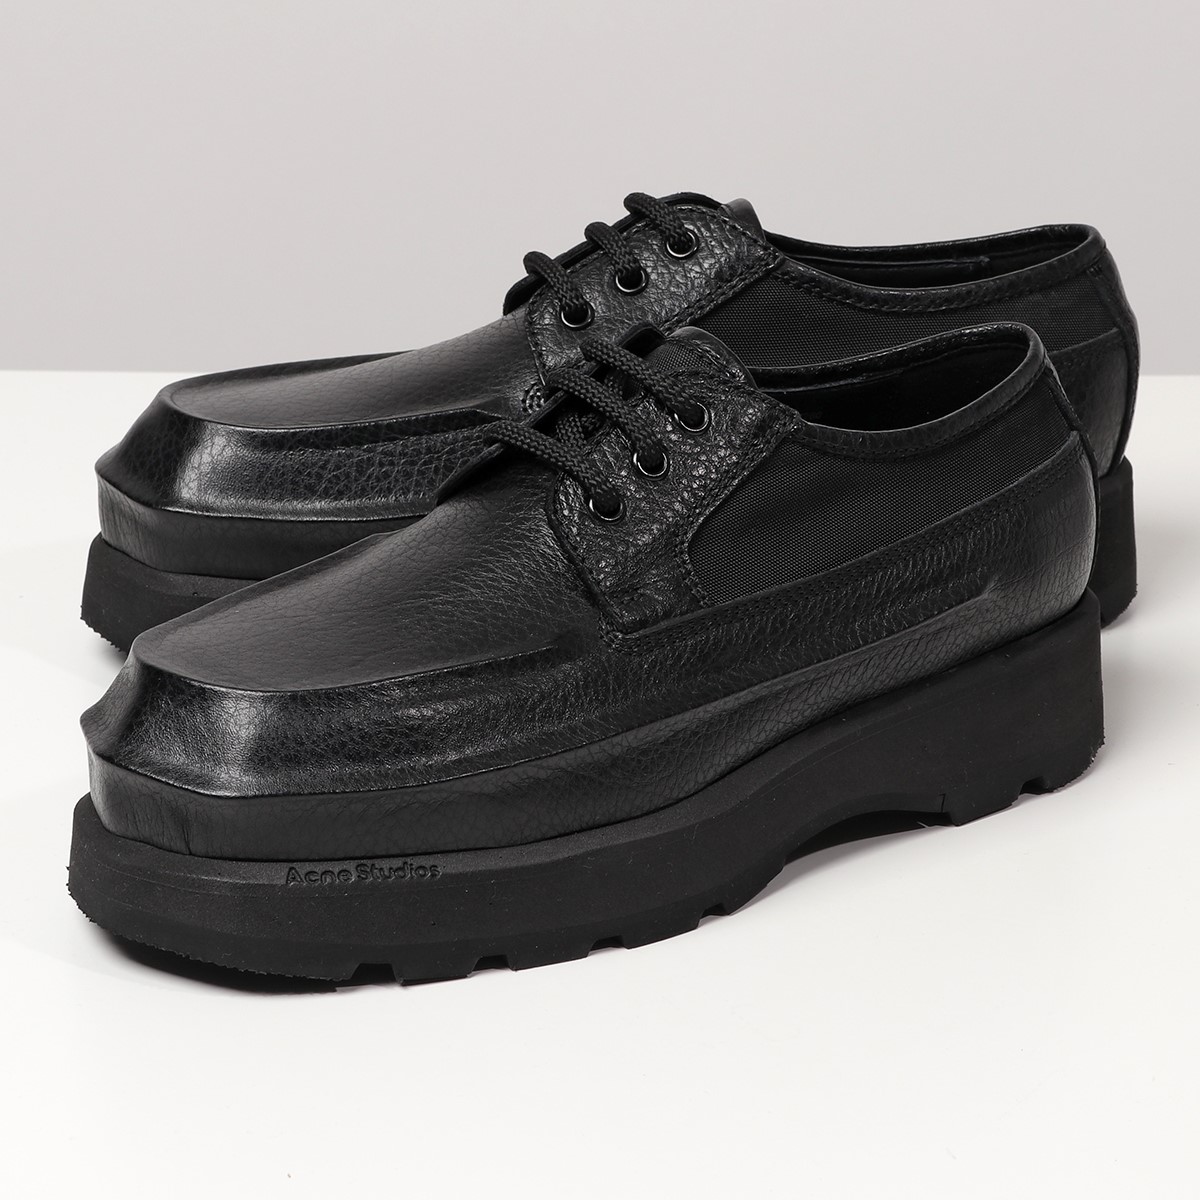 Acne Studios アクネストゥディオズ FN MN SHOE000139 レザー ダービーシューズ レースアップ 革靴 Black 靴 メンズ  | インポートセレクト musee